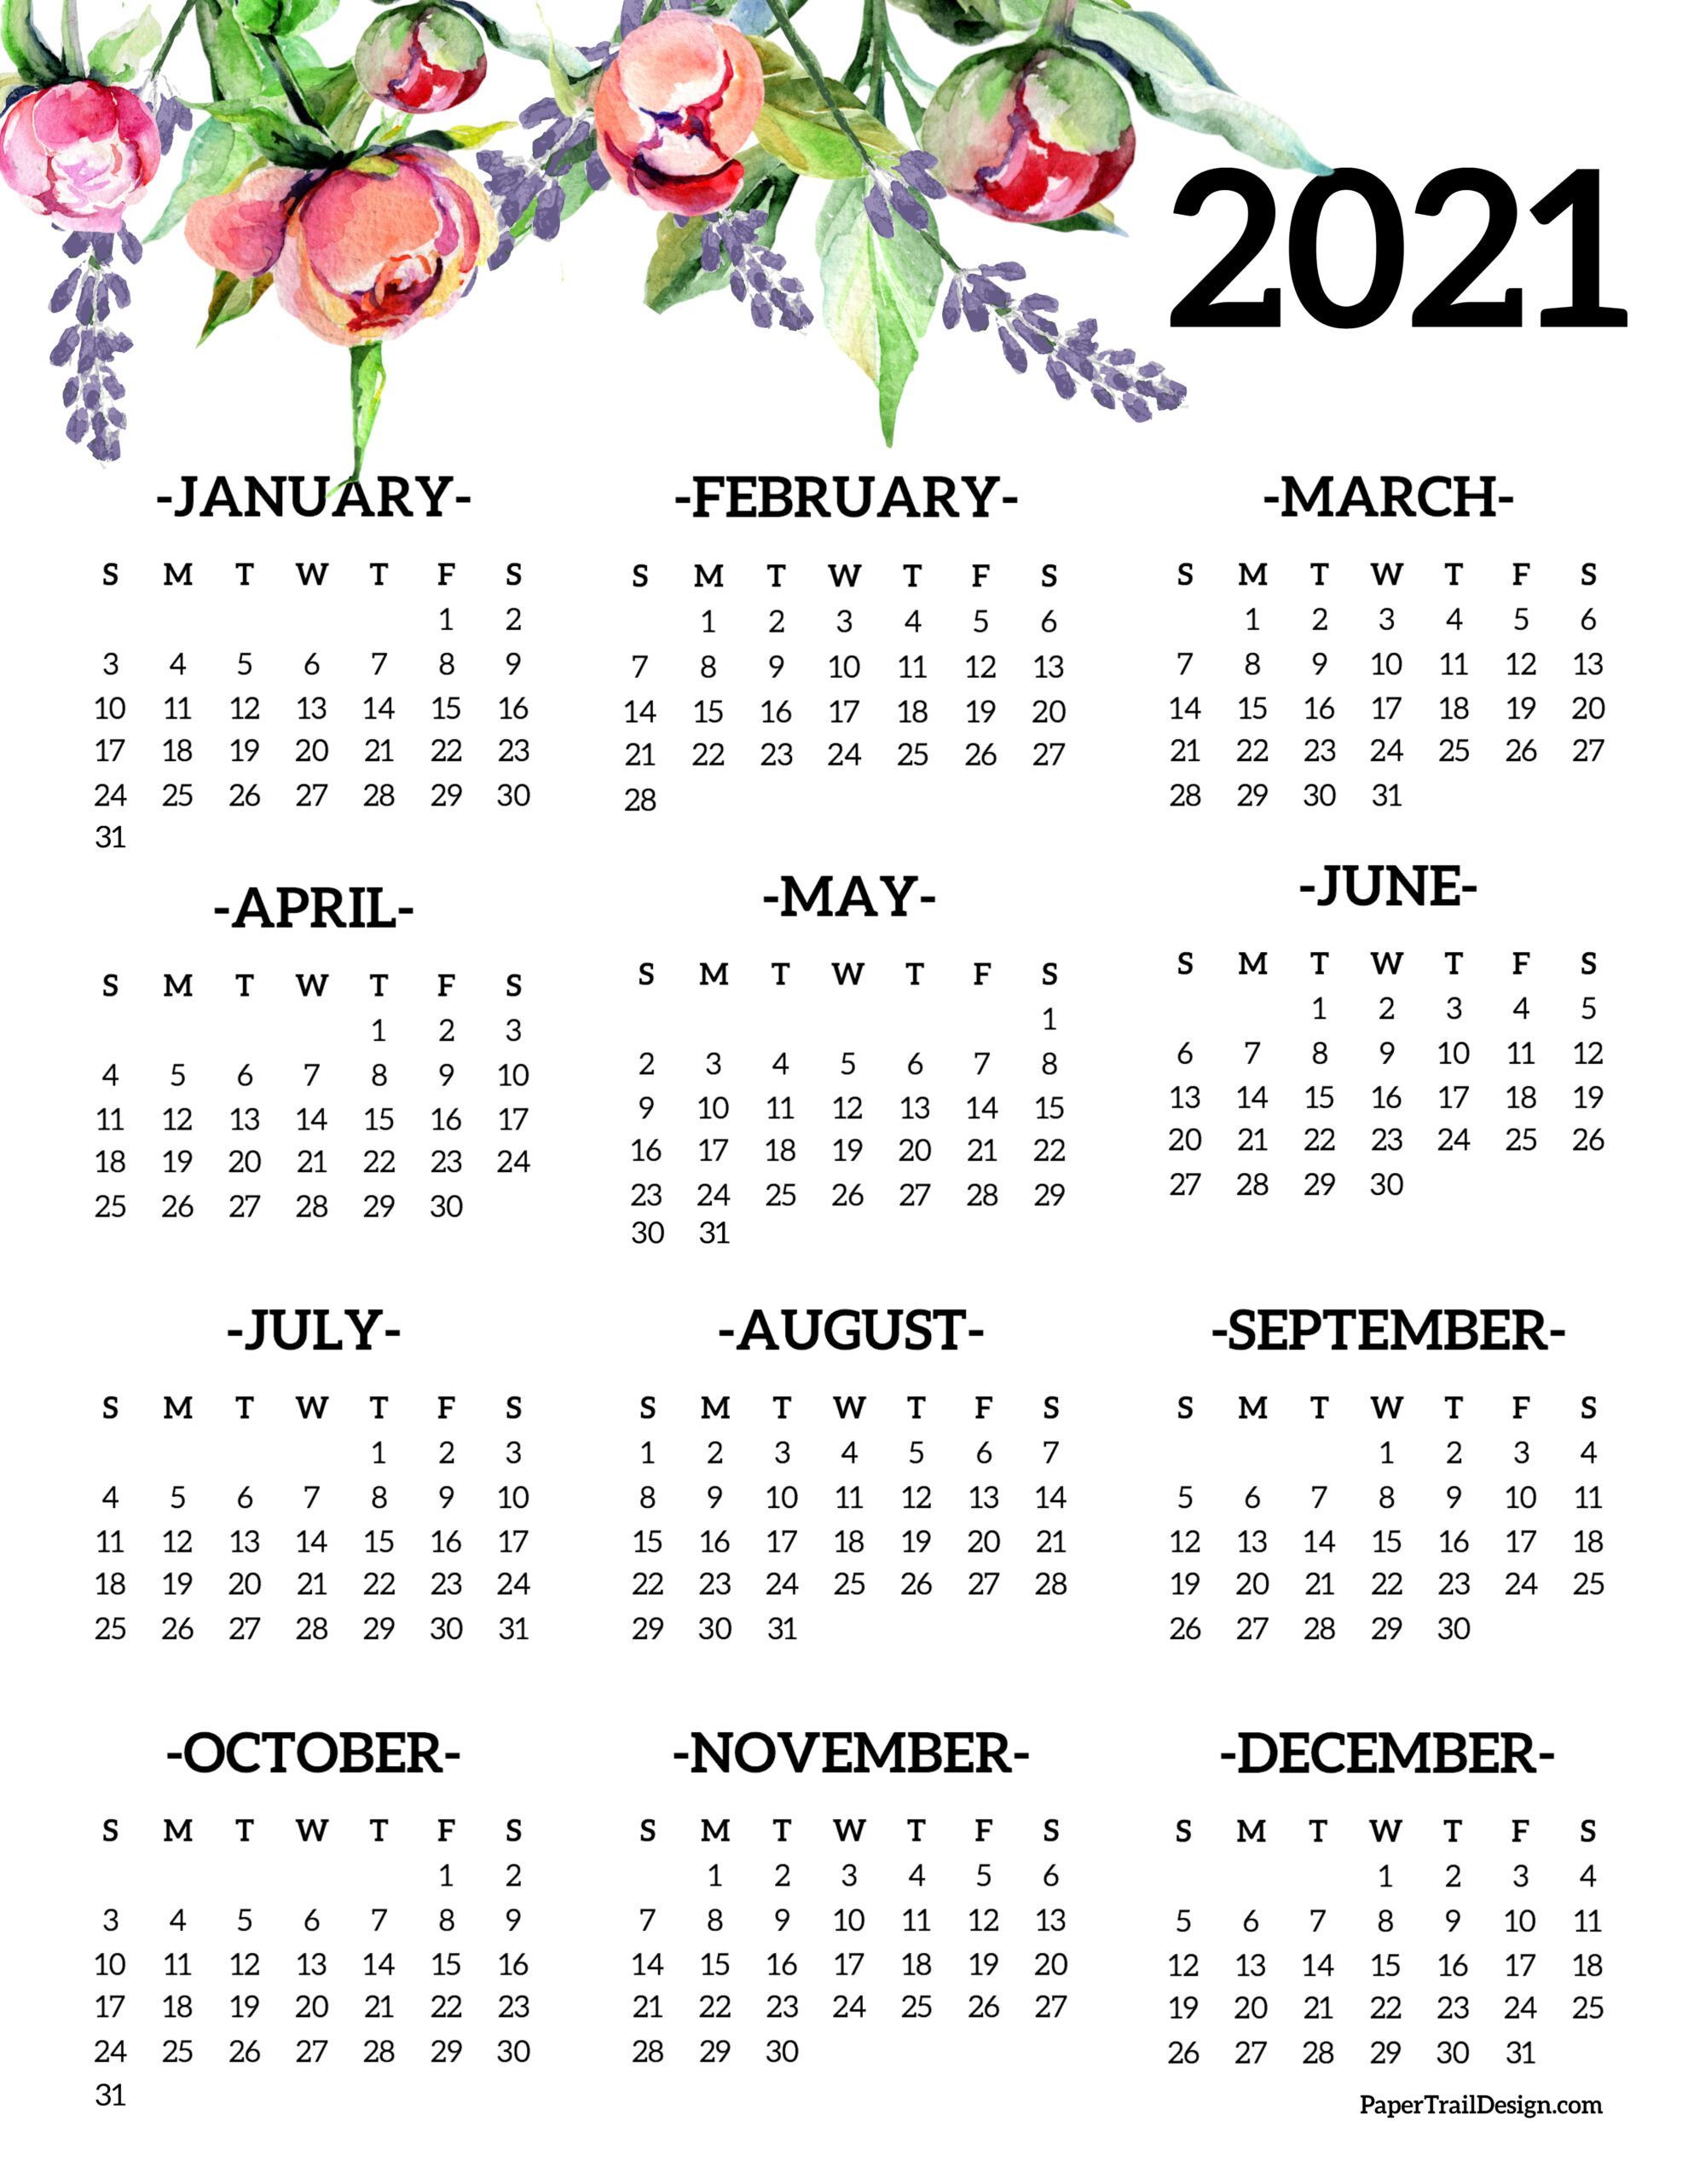 Free Printable 2021 One Page Floral Calendar. Paper Trail Design. Printable yearly calendar, Calendar printables, Print calendar